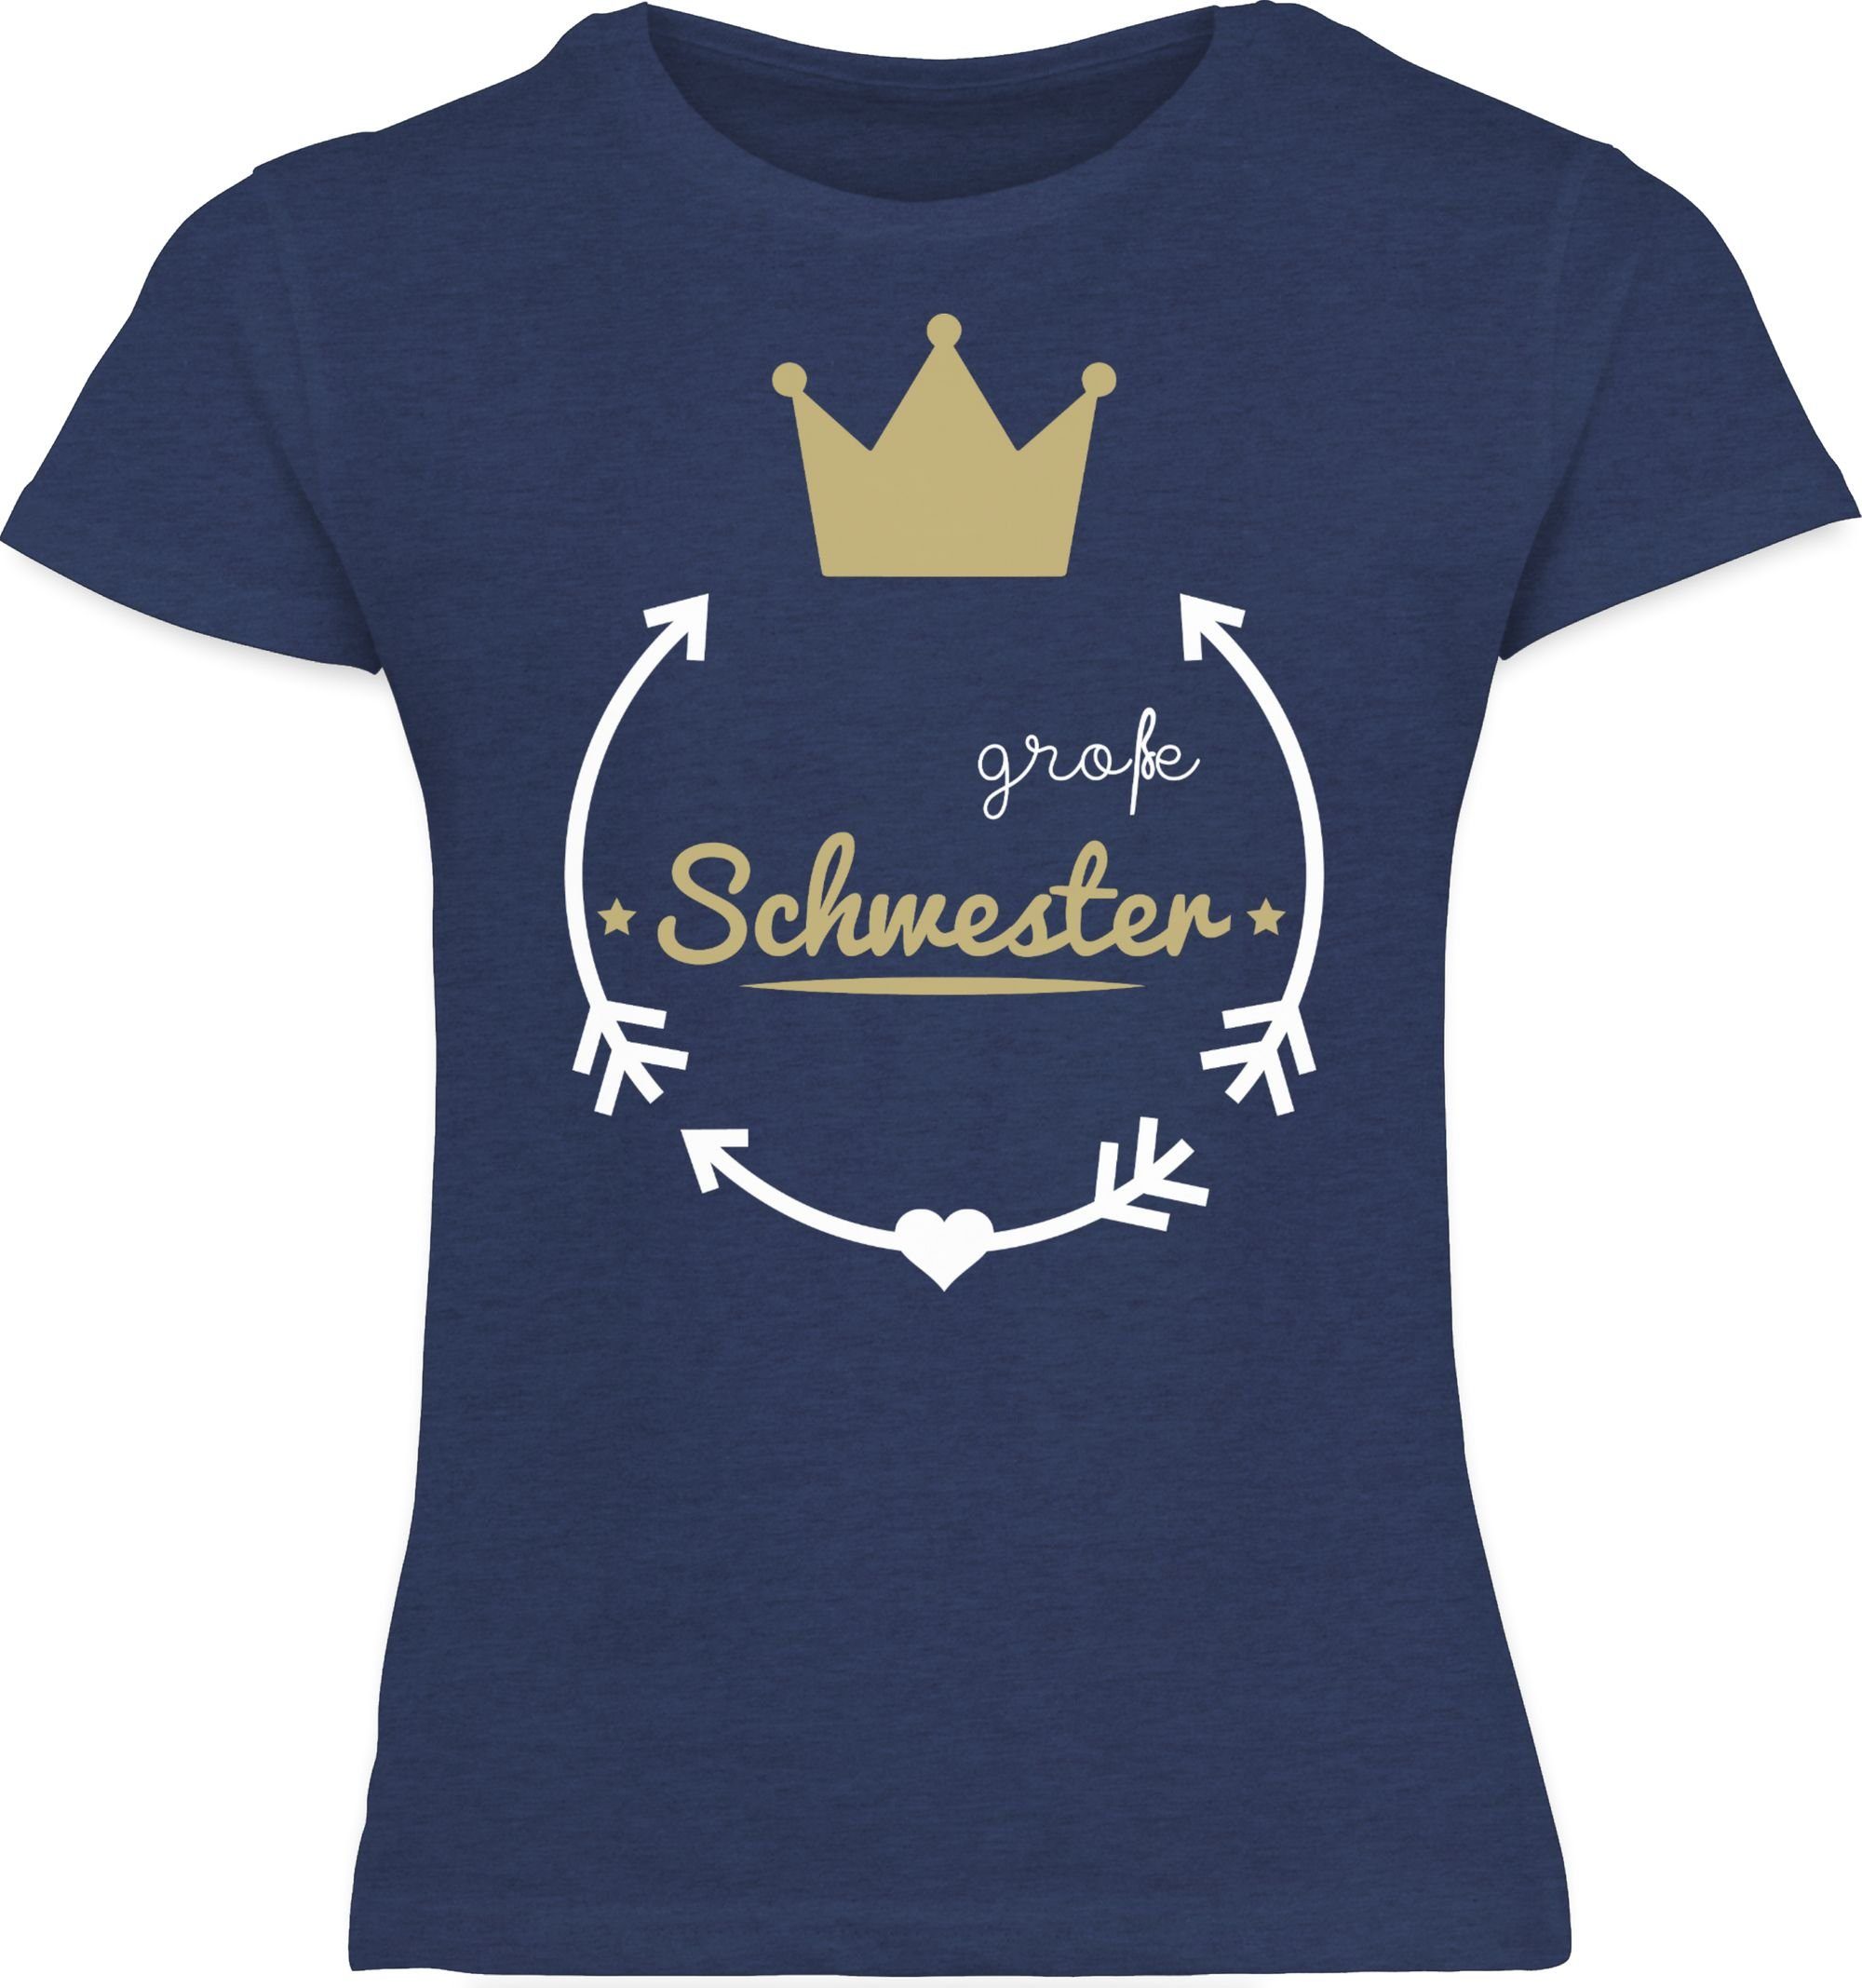 Krone Schwester T-Shirt Geschwister - Geschenk - Shirtracer Schwester Dunkelblau Große 2 Weiss Meliert